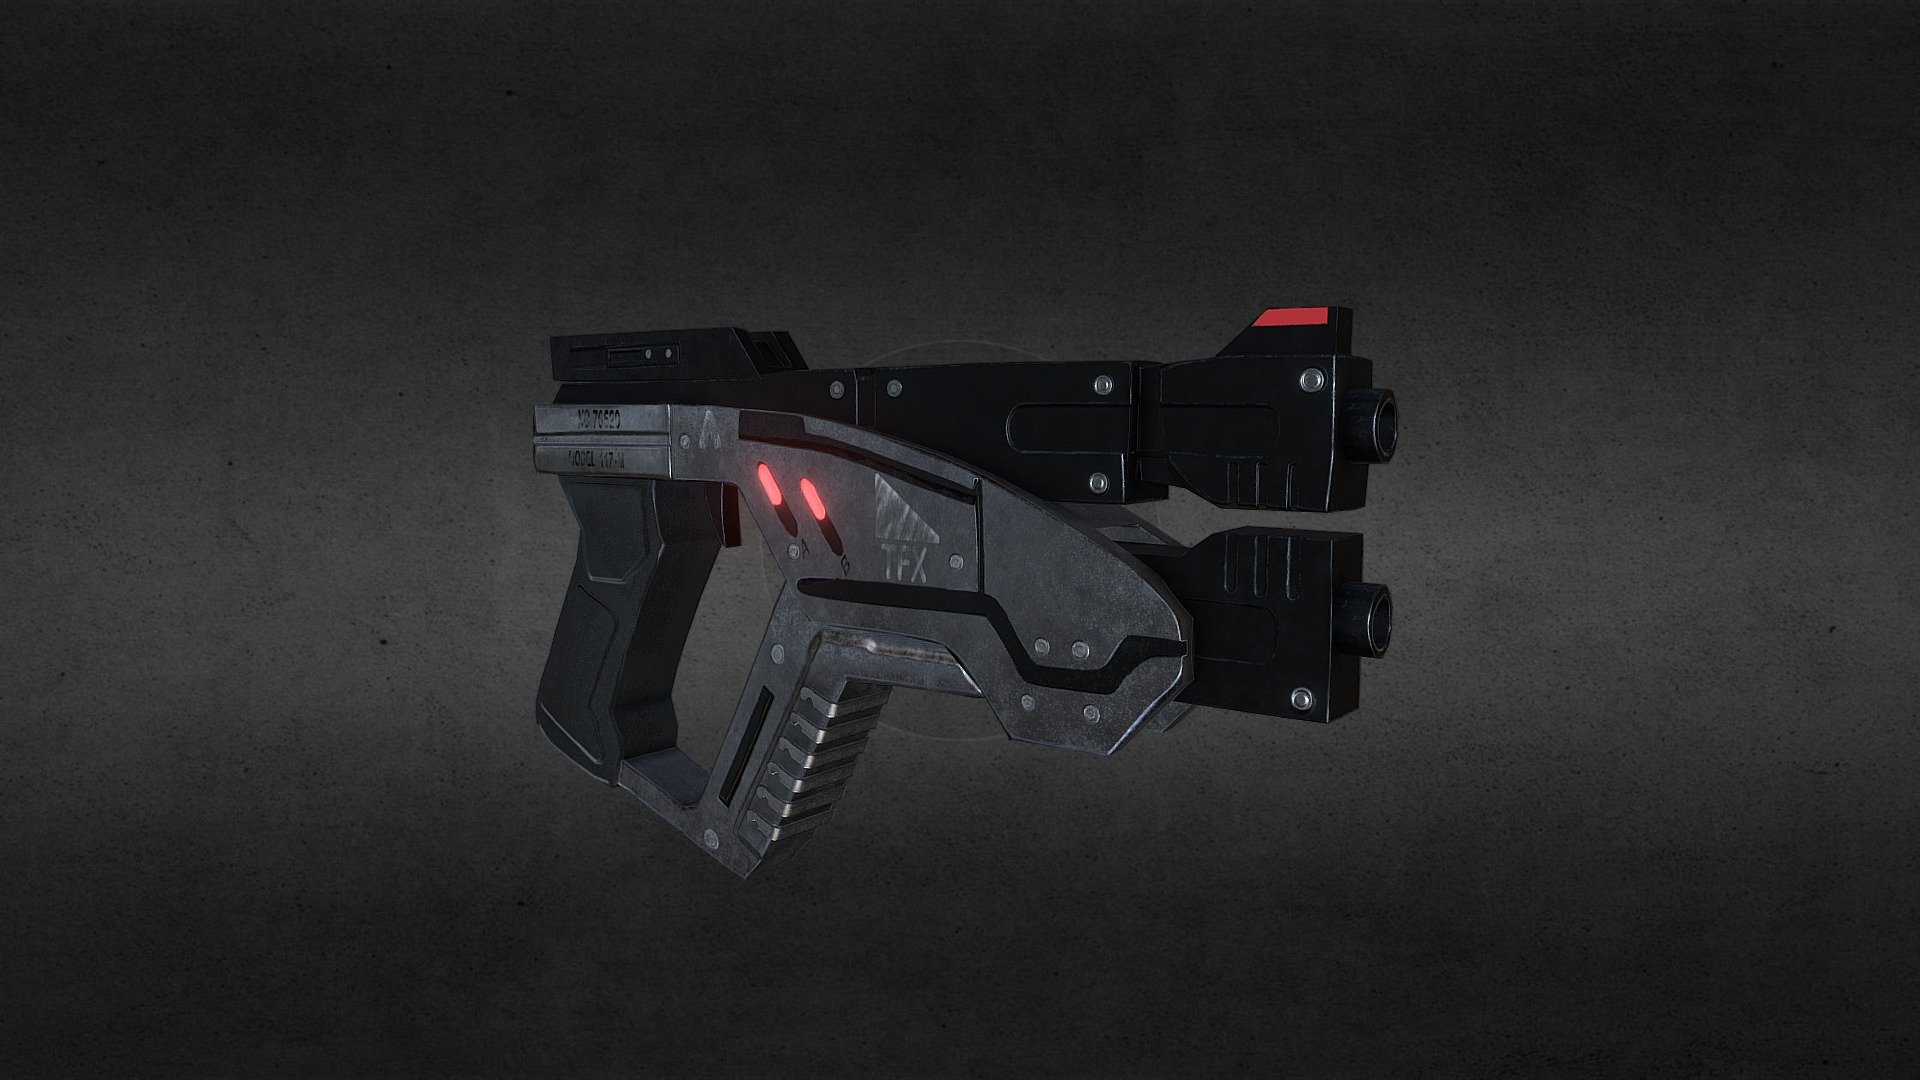 Mass Effect M3 Predator Pistol 3d Model By Marioastartes 2f27dfe Sketchfab 7038